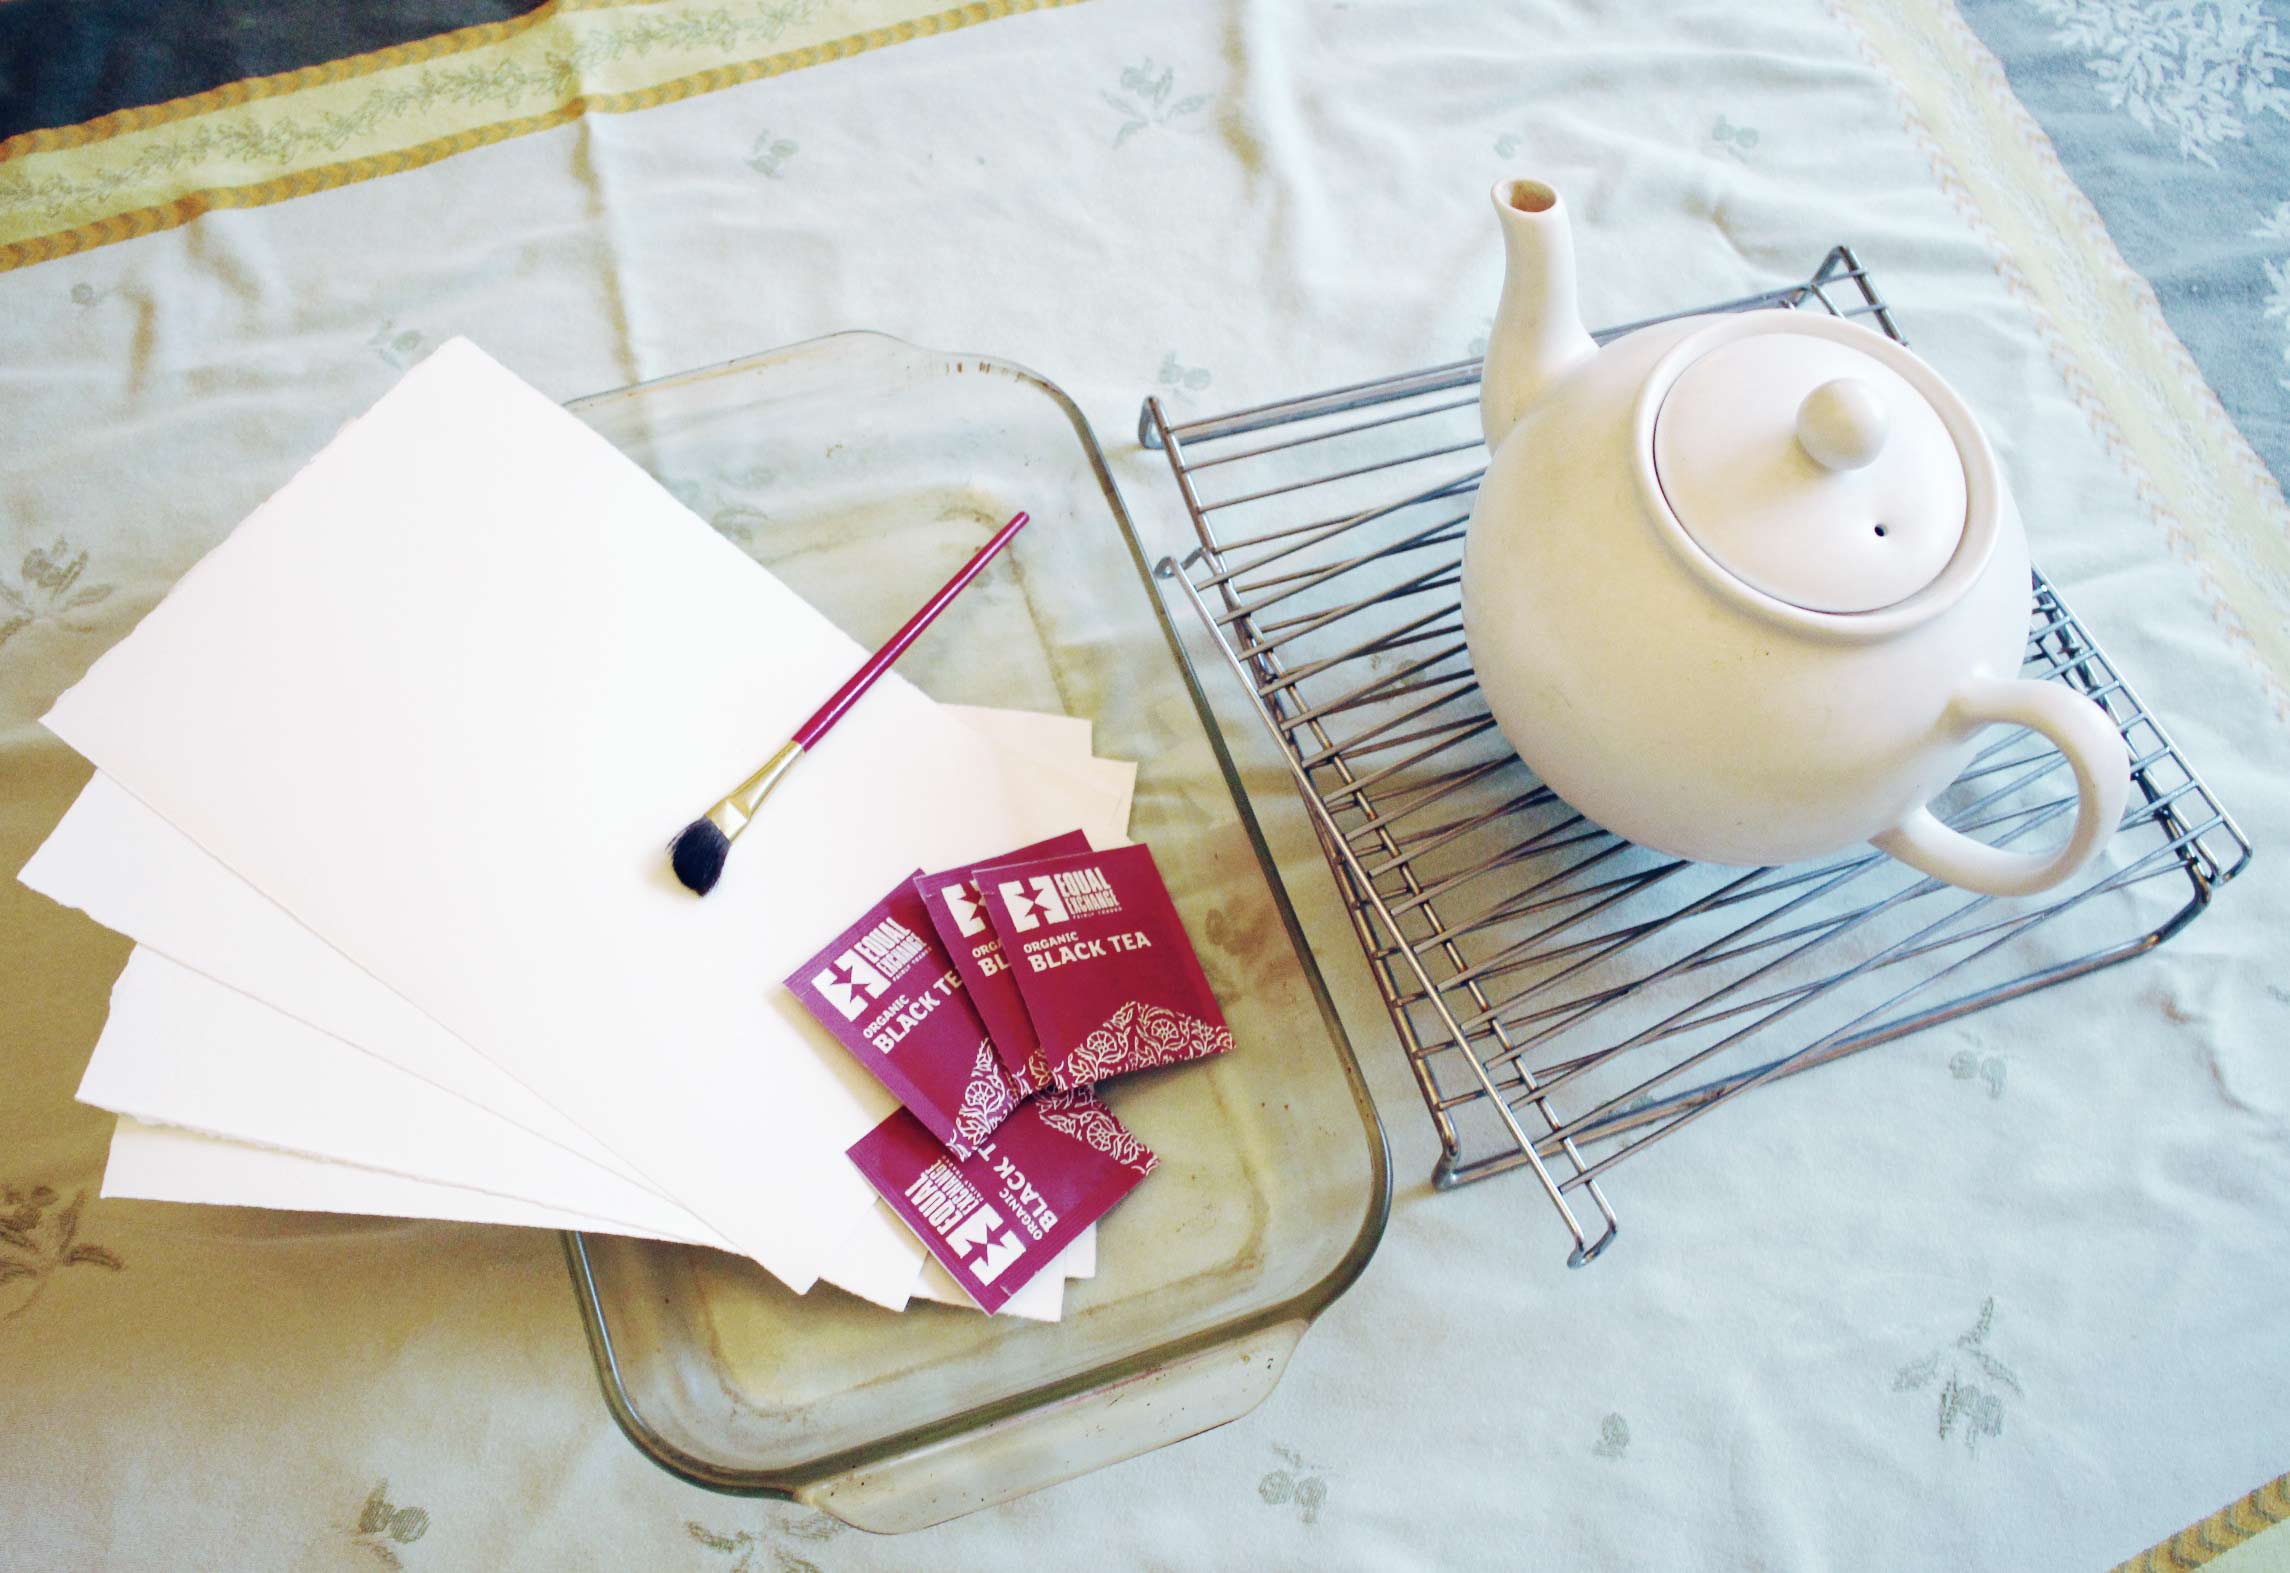 The Art of Tea-Dye